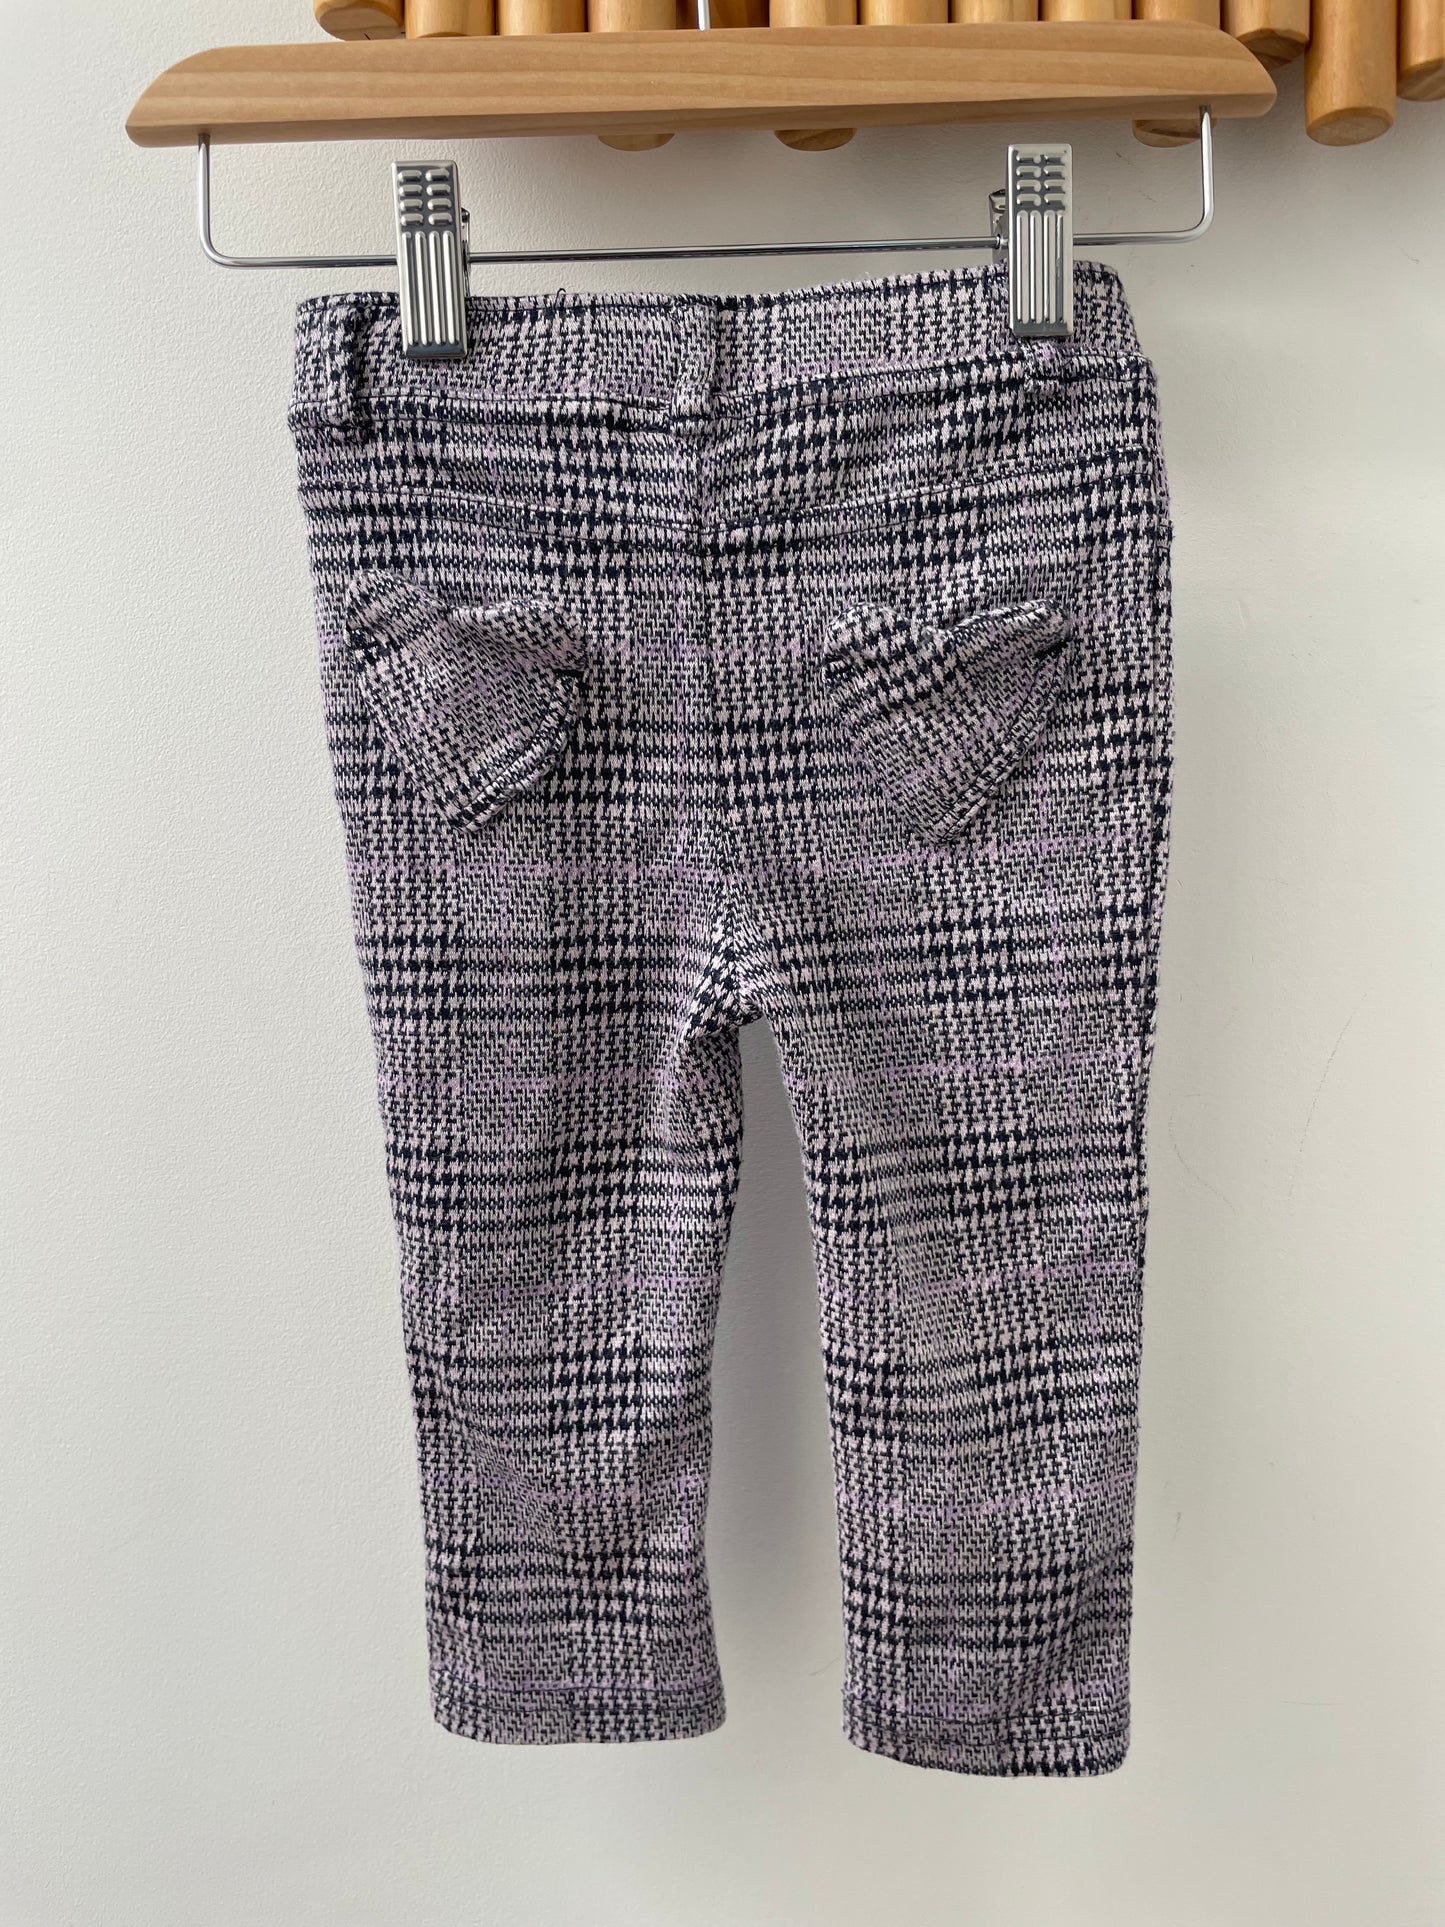 Purple checkered pants 12-18m